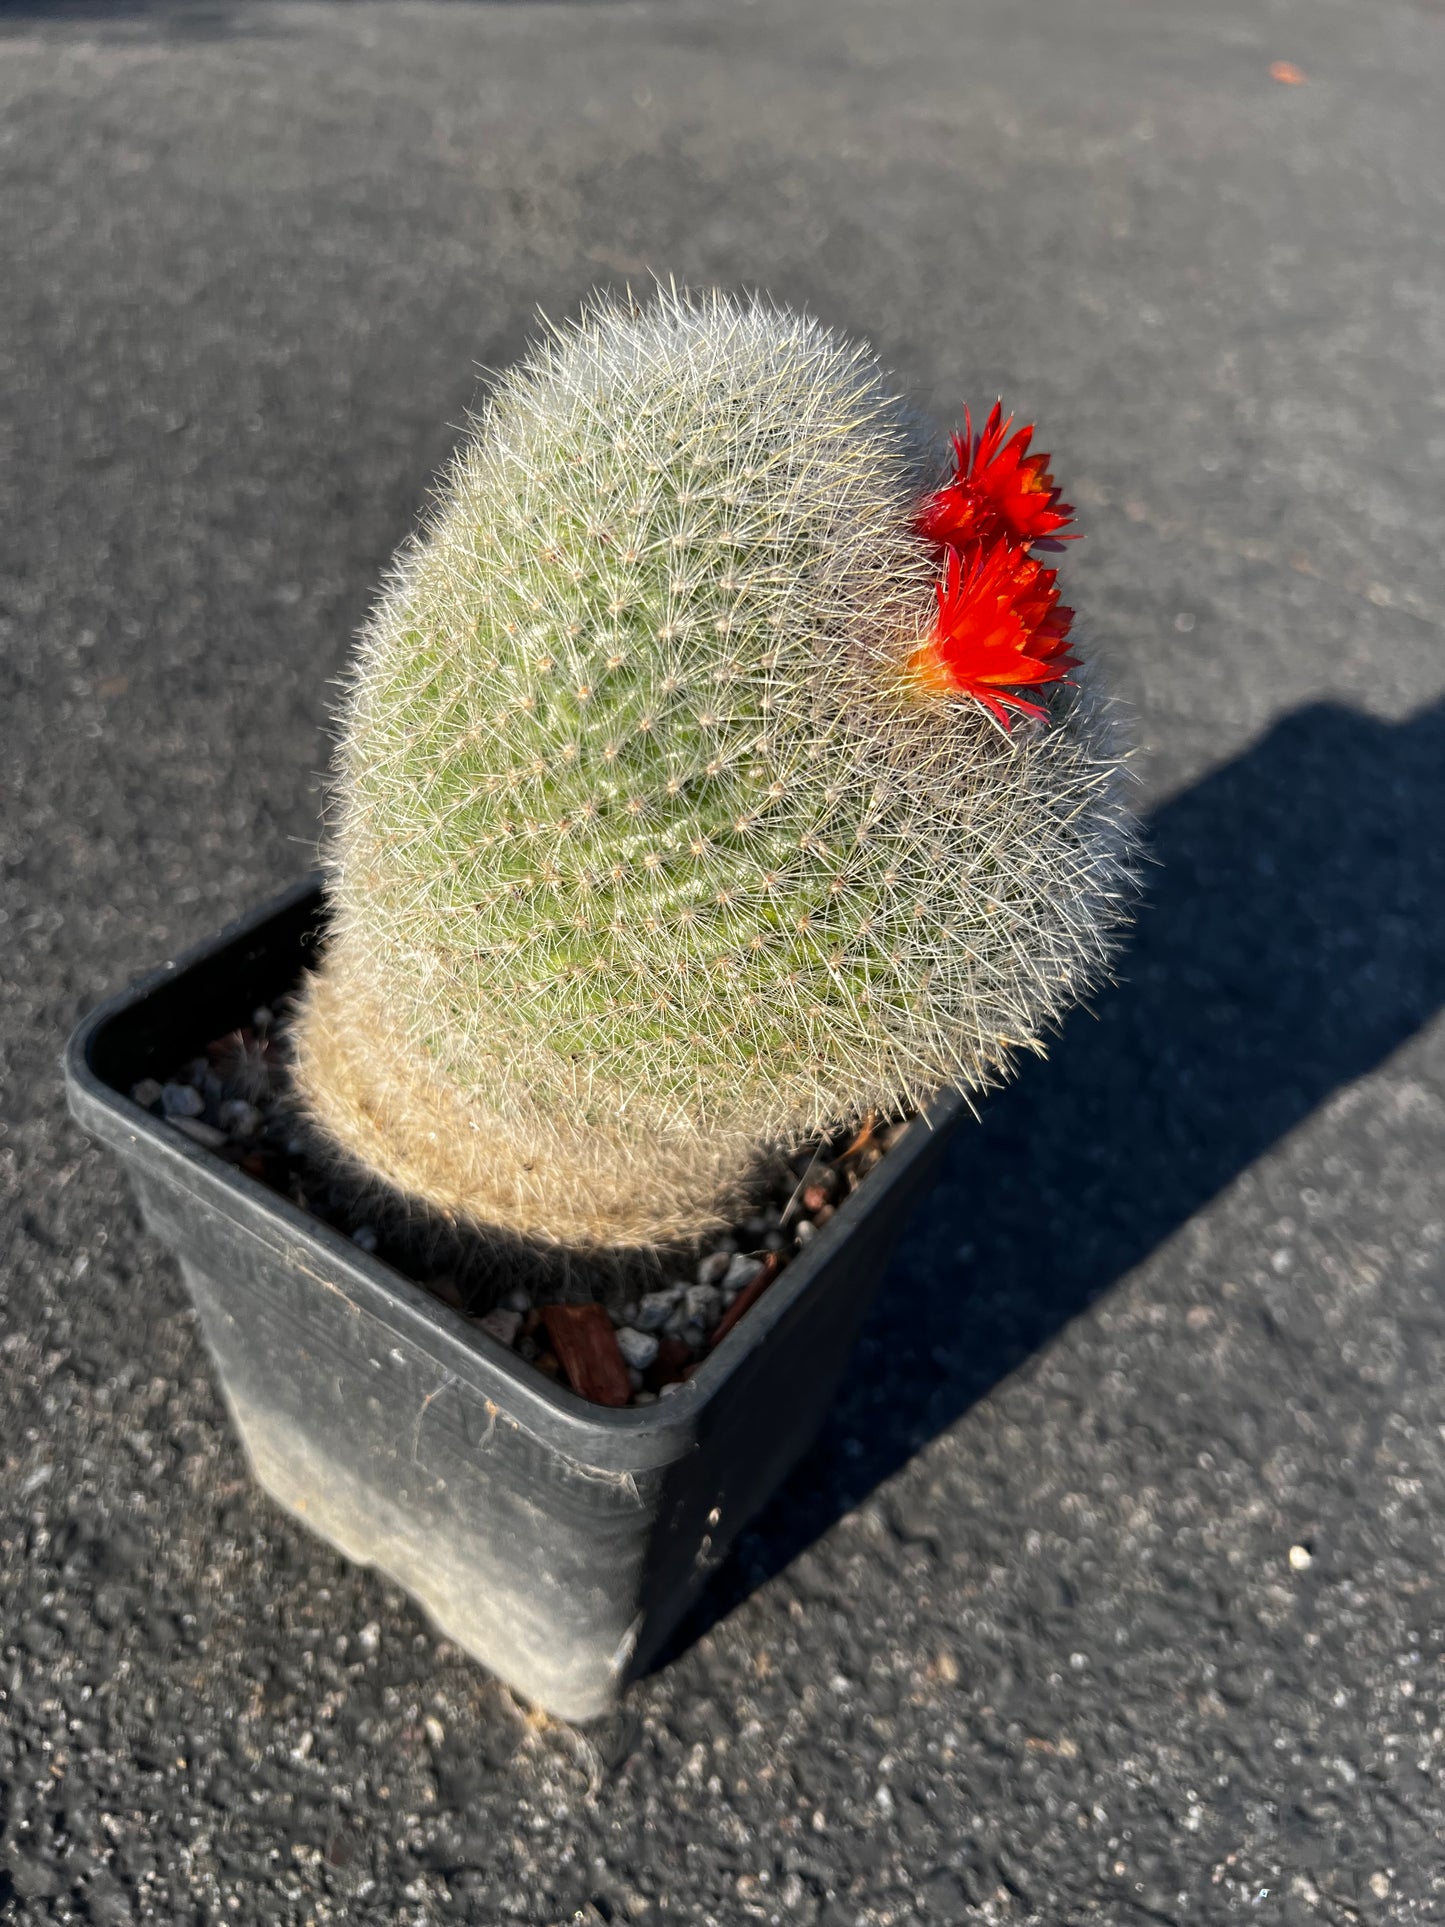 Cactus Corona Roja